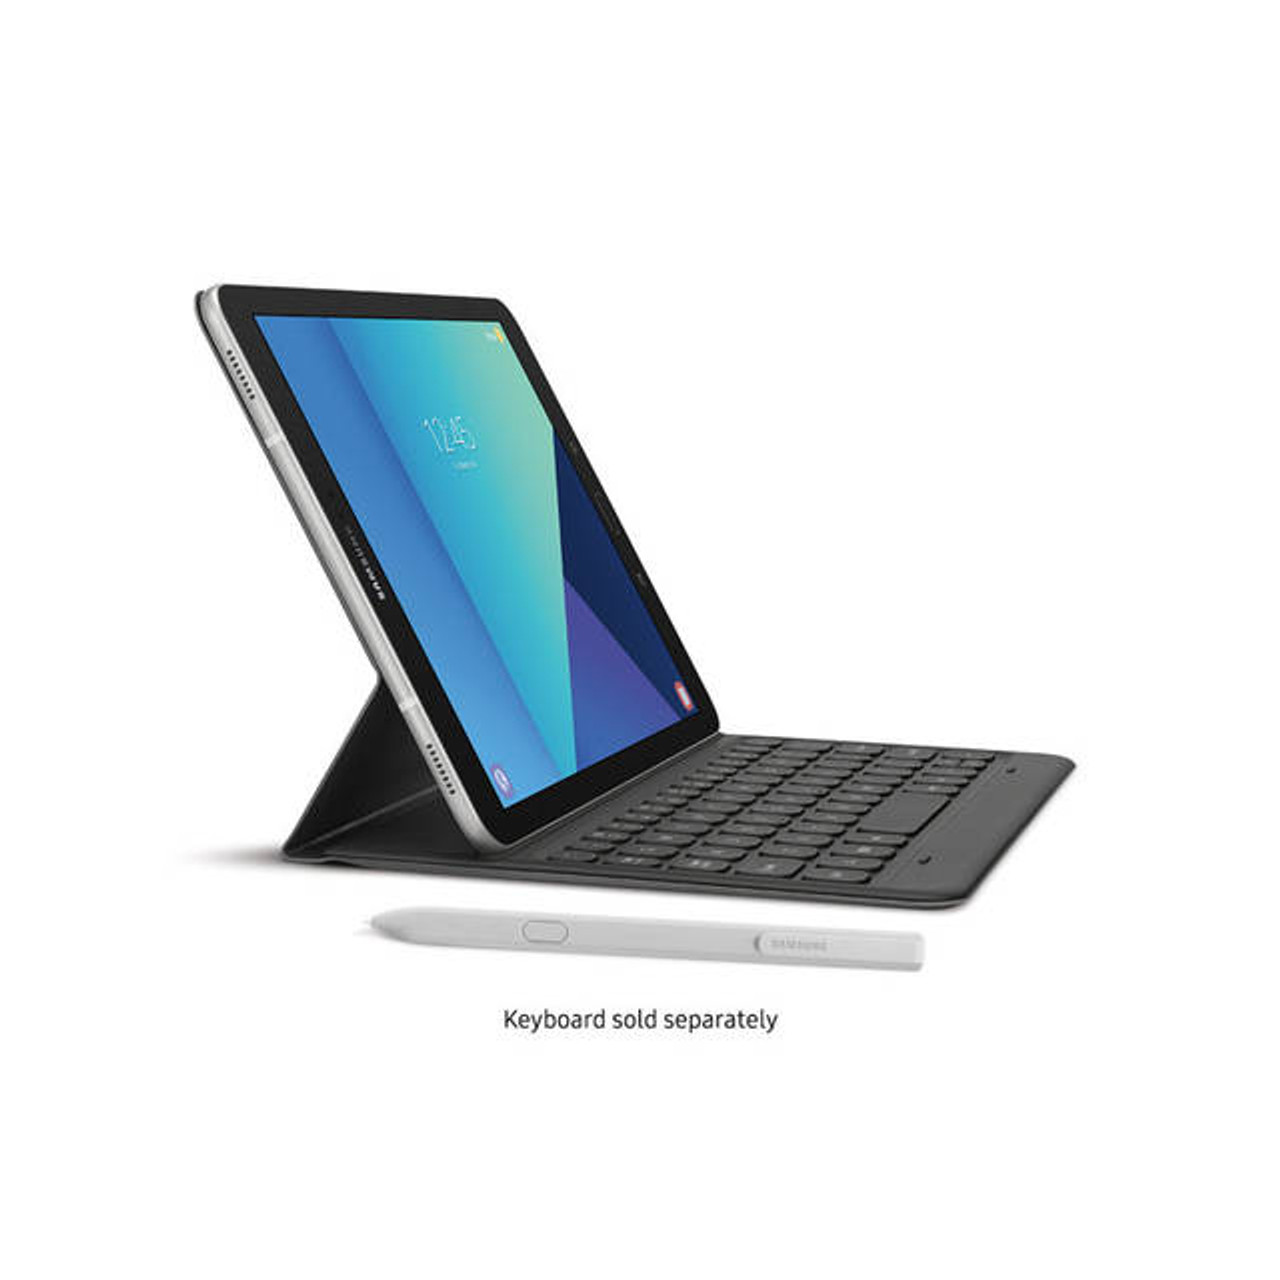 Samsung Galaxy Tab S3 SM-T820NZSAXAR 9.7 inch Qualcomm APQ8096 2.15GHz+1.6GHz/ 4GB/ 32GB/ Android 7.0 Tablet w/ pen (Silver)